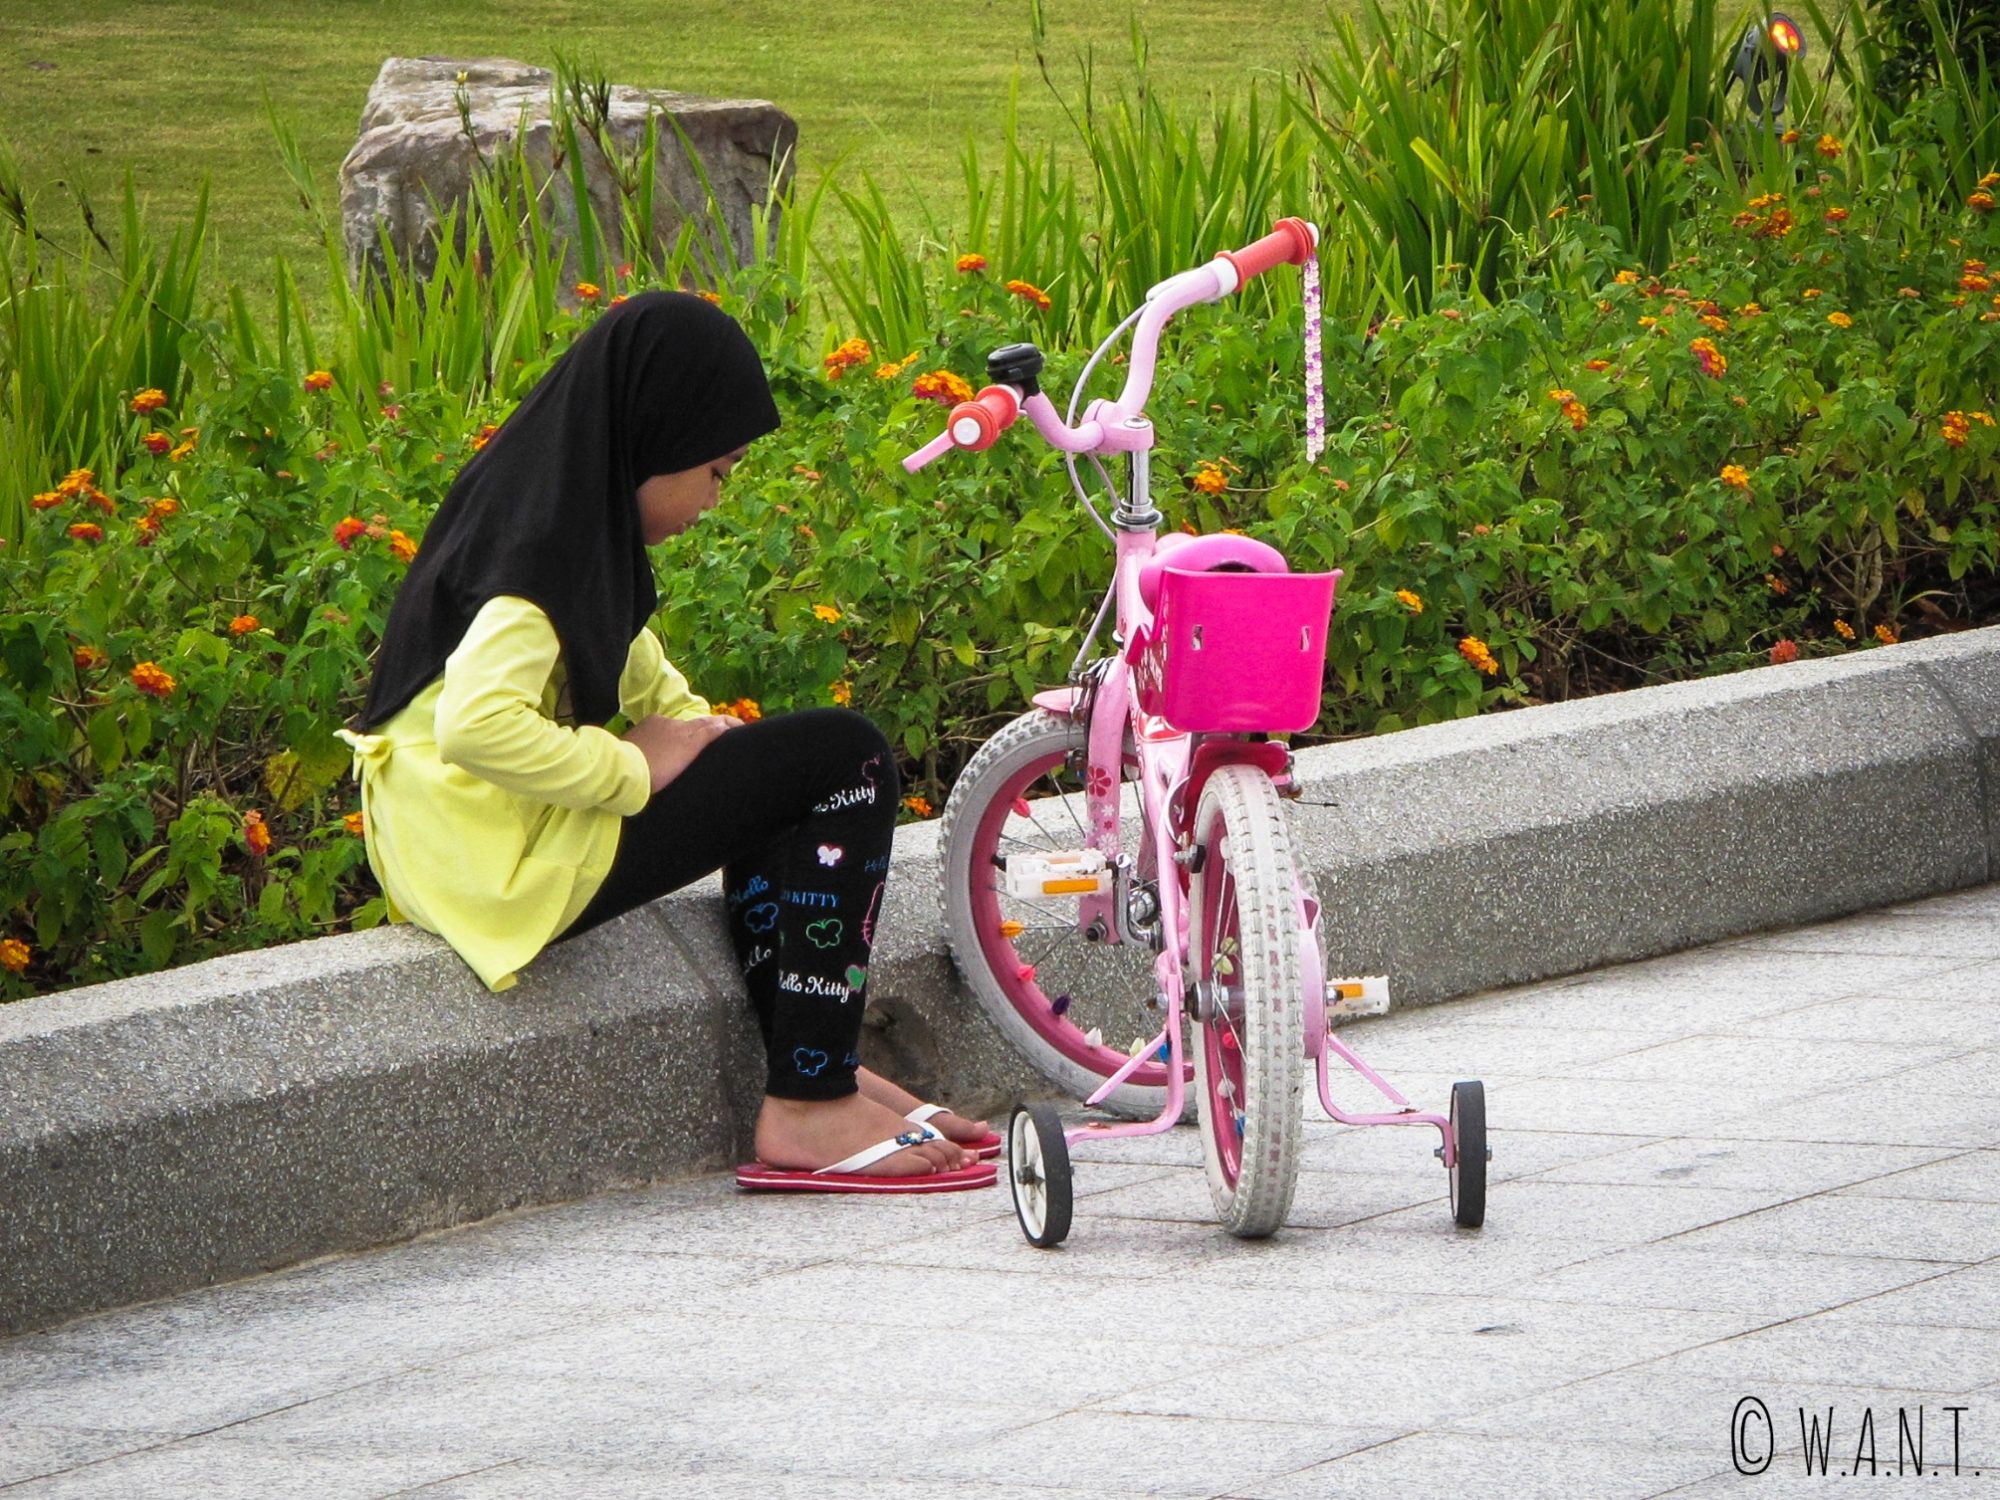 Filette et son vélo dans le parc Taman Mahkota Jubli Emas de Bandar Seri Begawan